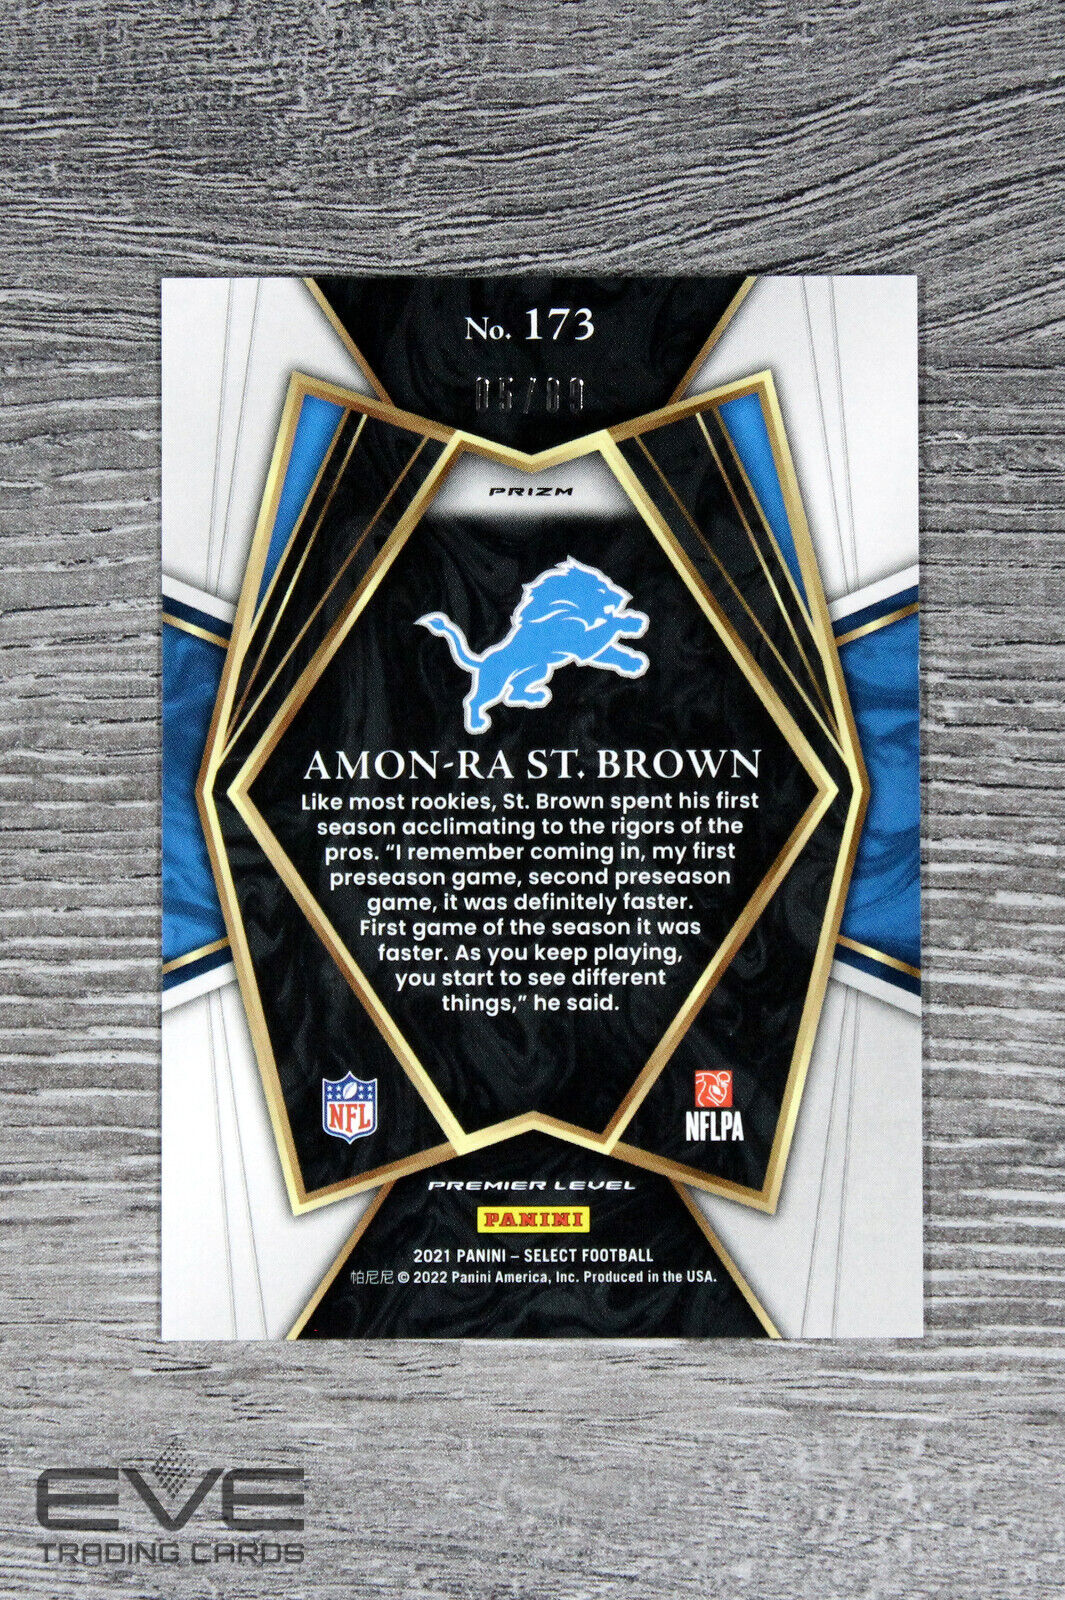 2021 Panini Select NFL Card #173 Amon-Ra St Brown Dragon Scale Prizm /89 NM/M